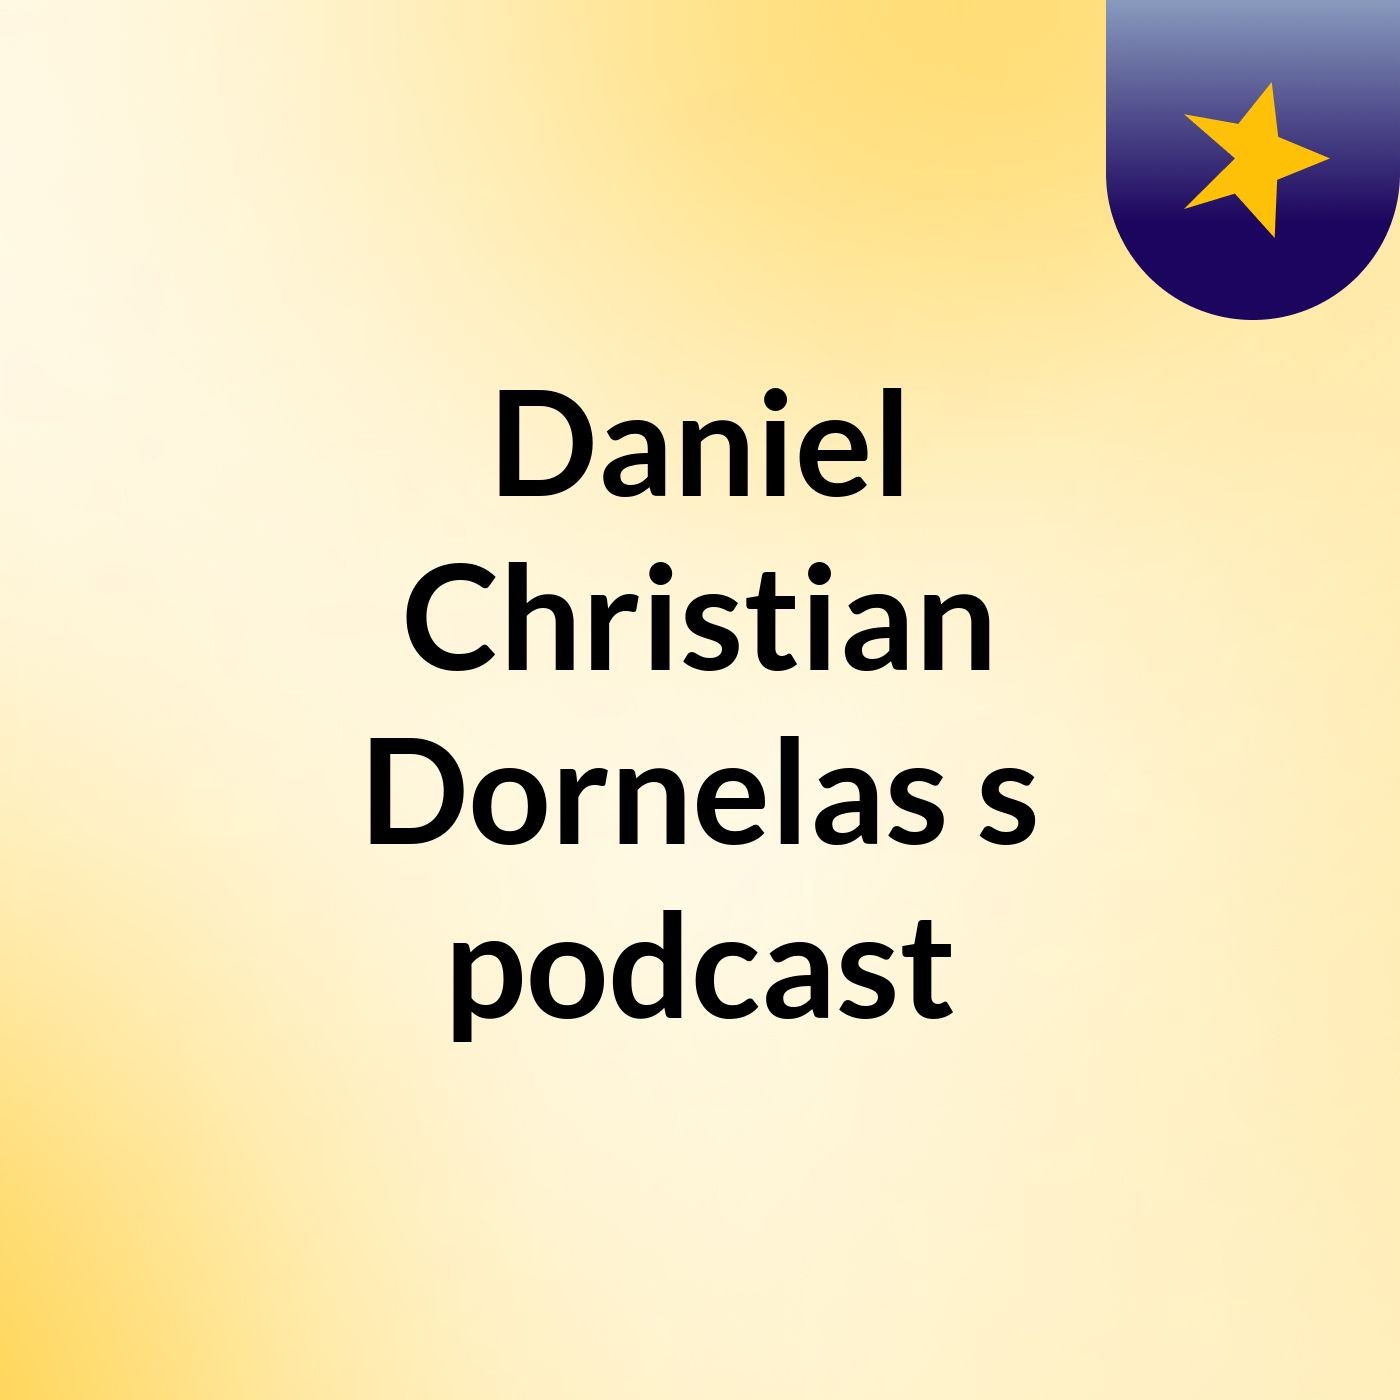 Daniel Christian Dornelas's podcast